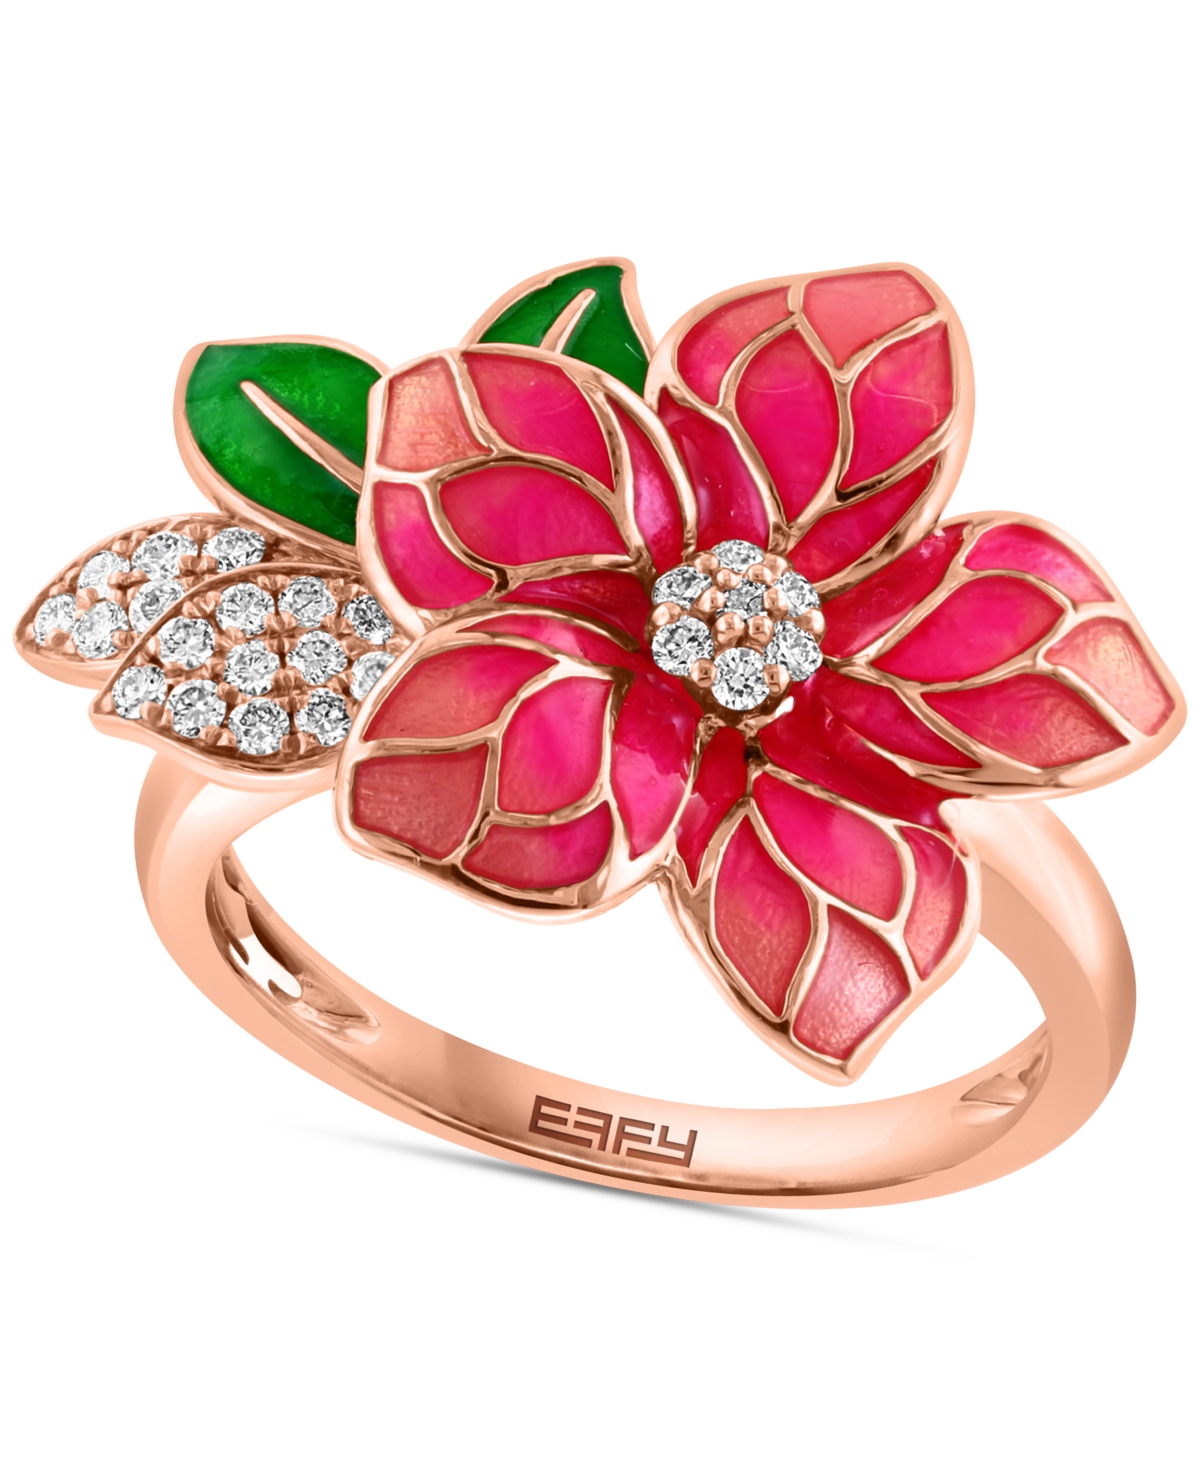 Effy Pink & Green Enamel & Diamond Flower Ring (1/5 ct. t.w.) in 14k Rose Gold - Rose Gold